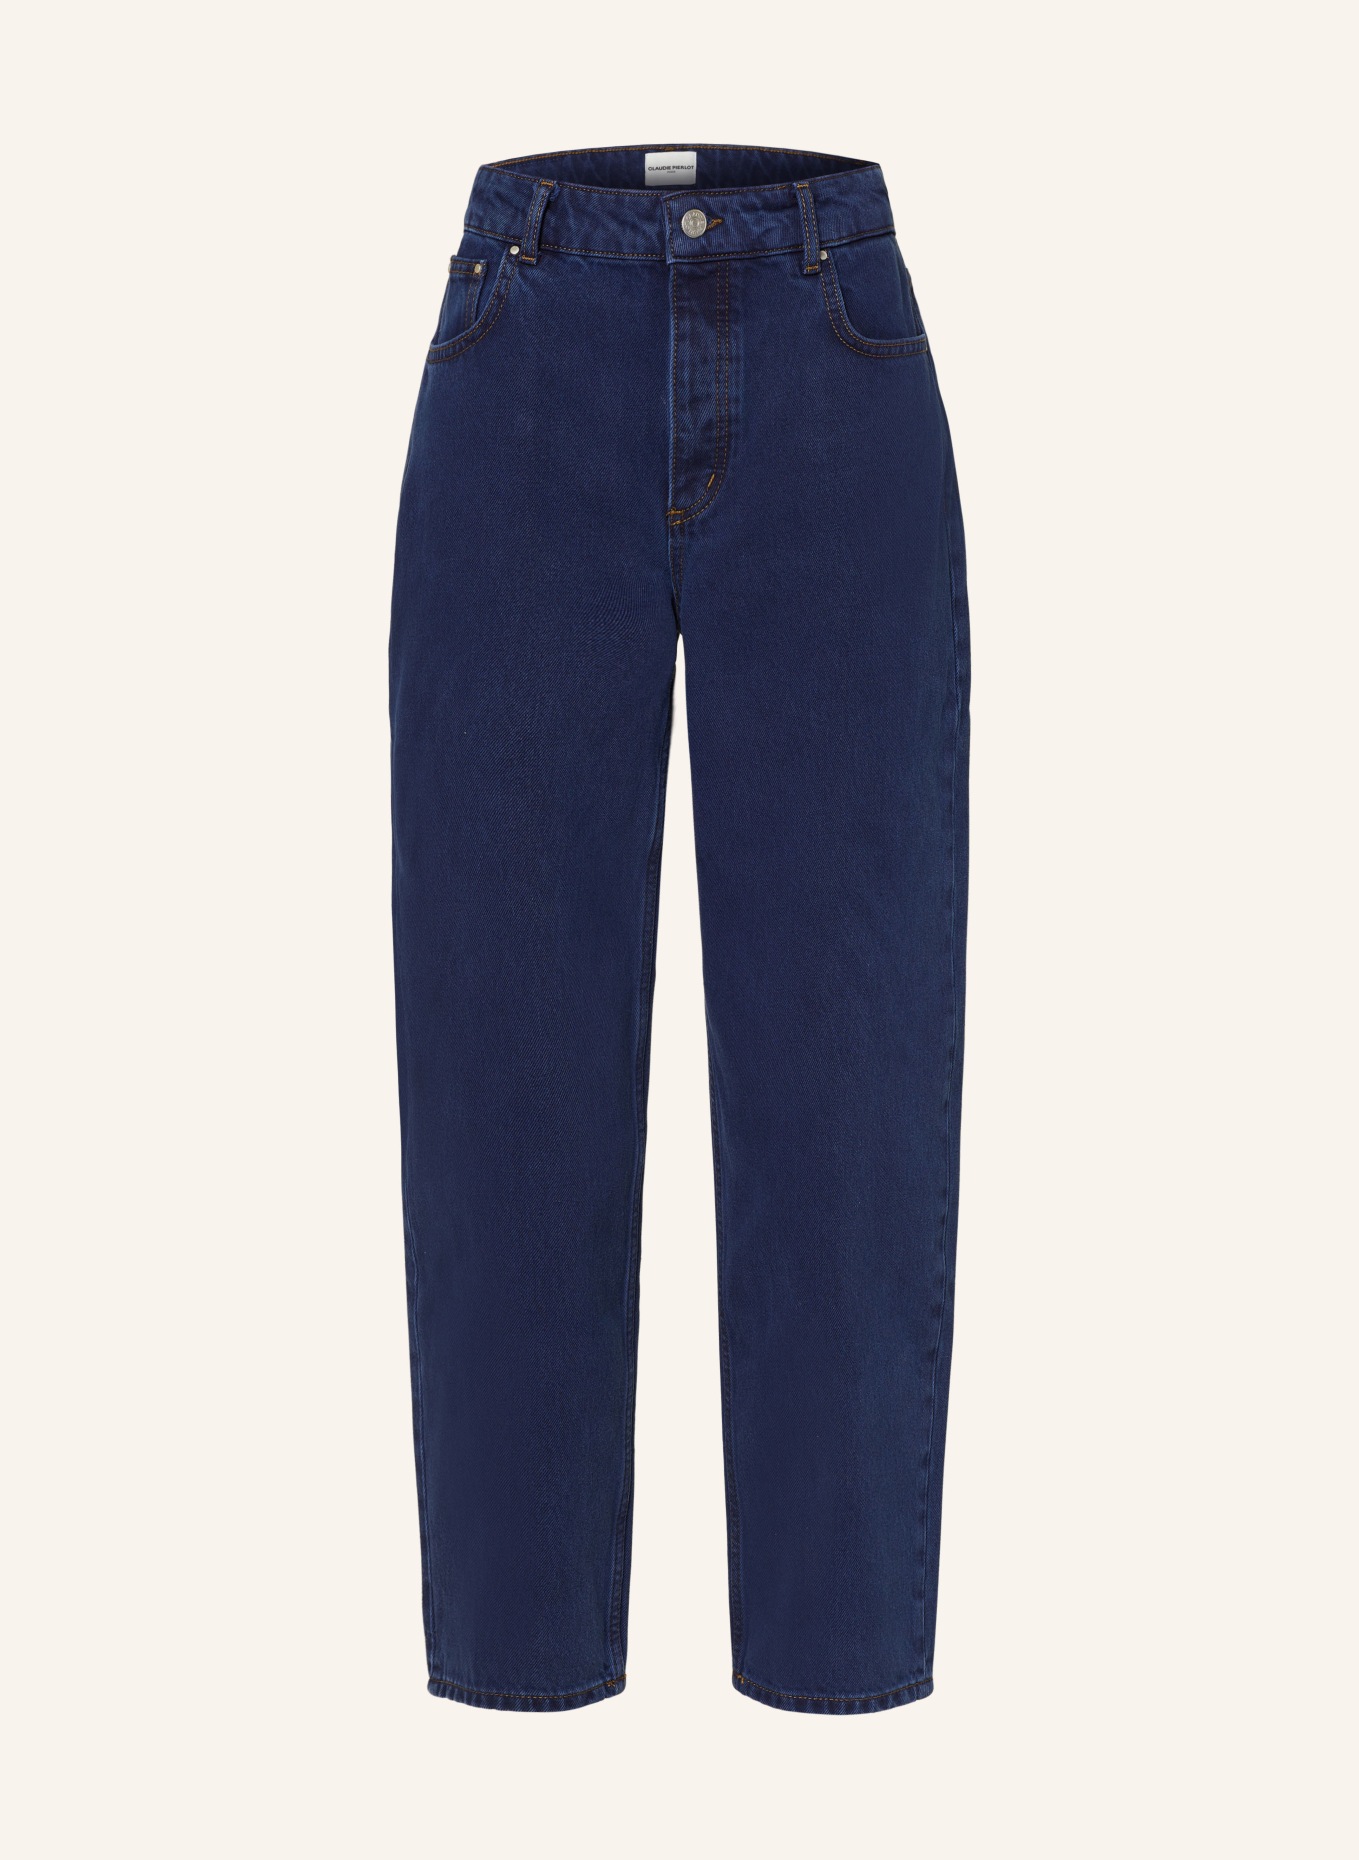 CLAUDIE PIERLOT Jeans, Farbe: D031 DENIM MID BLUE (Bild 1)